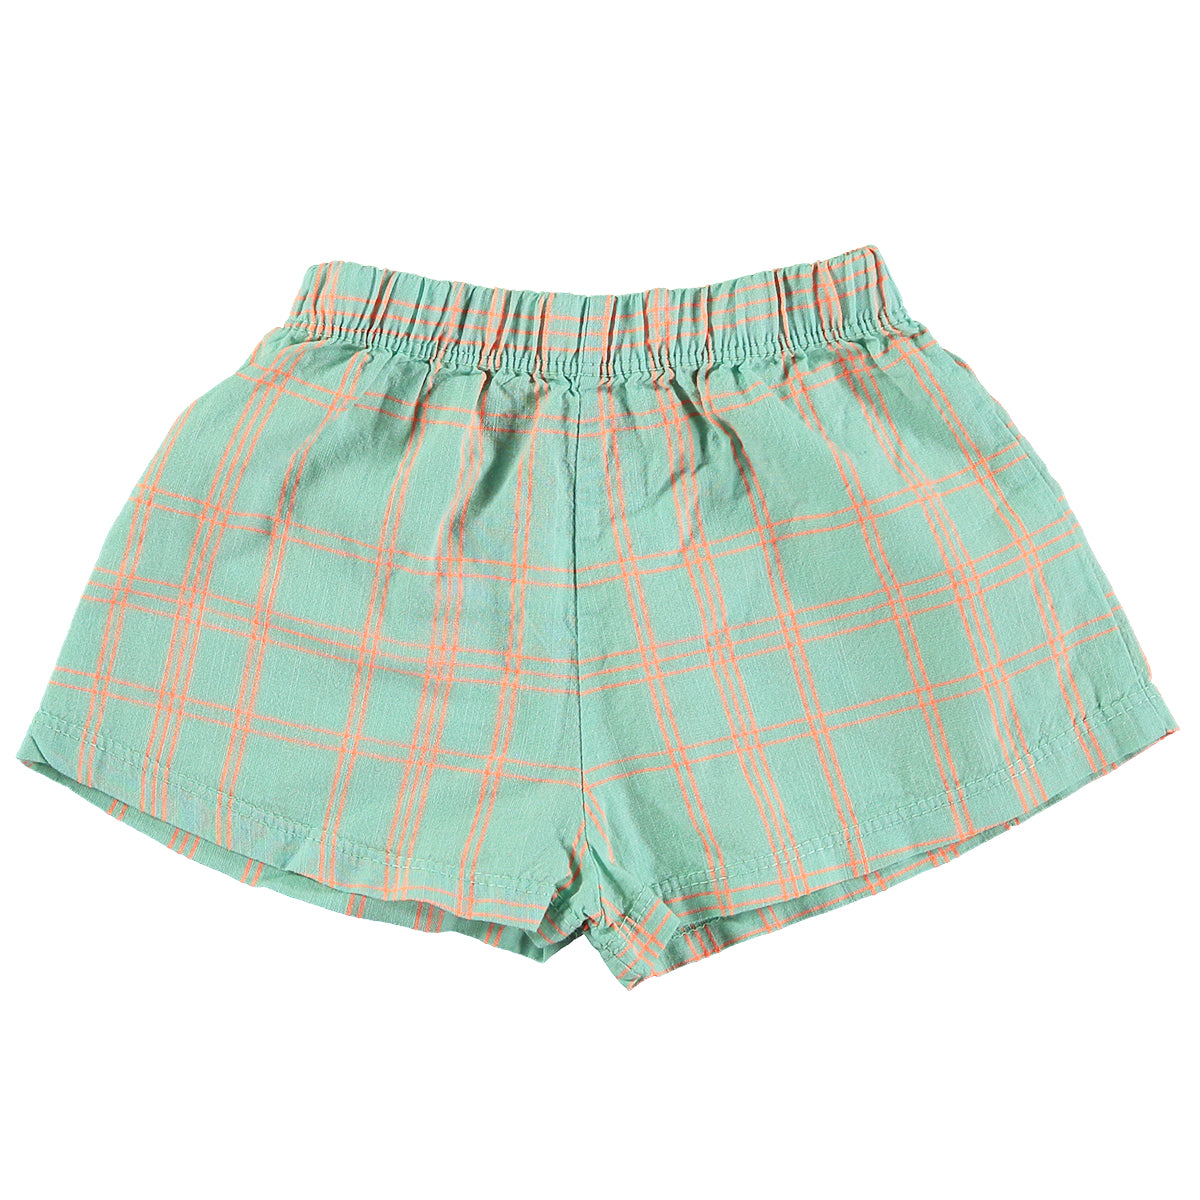 Lotie Kids - baby woven shorts - checks - seagreen